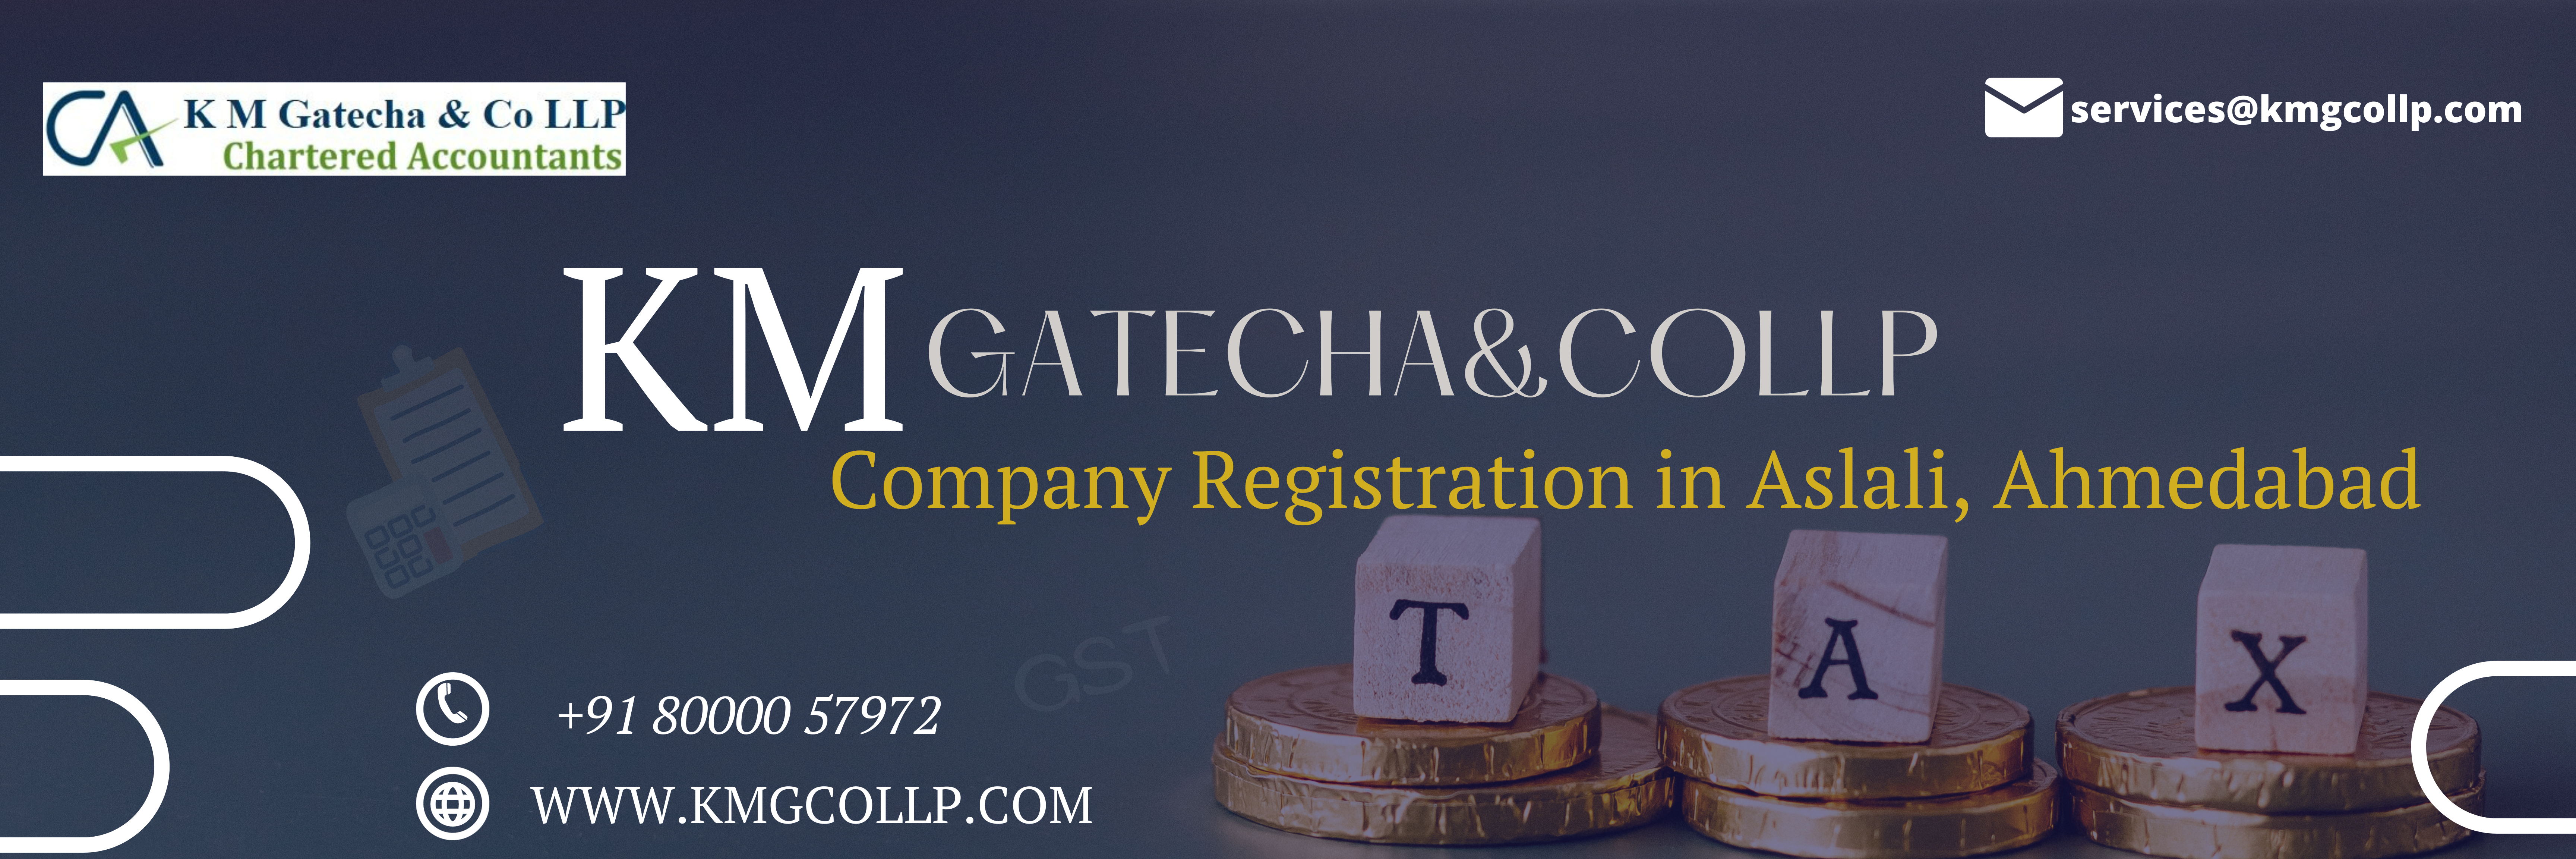 Company Registration in Aslali, Ahmedabad